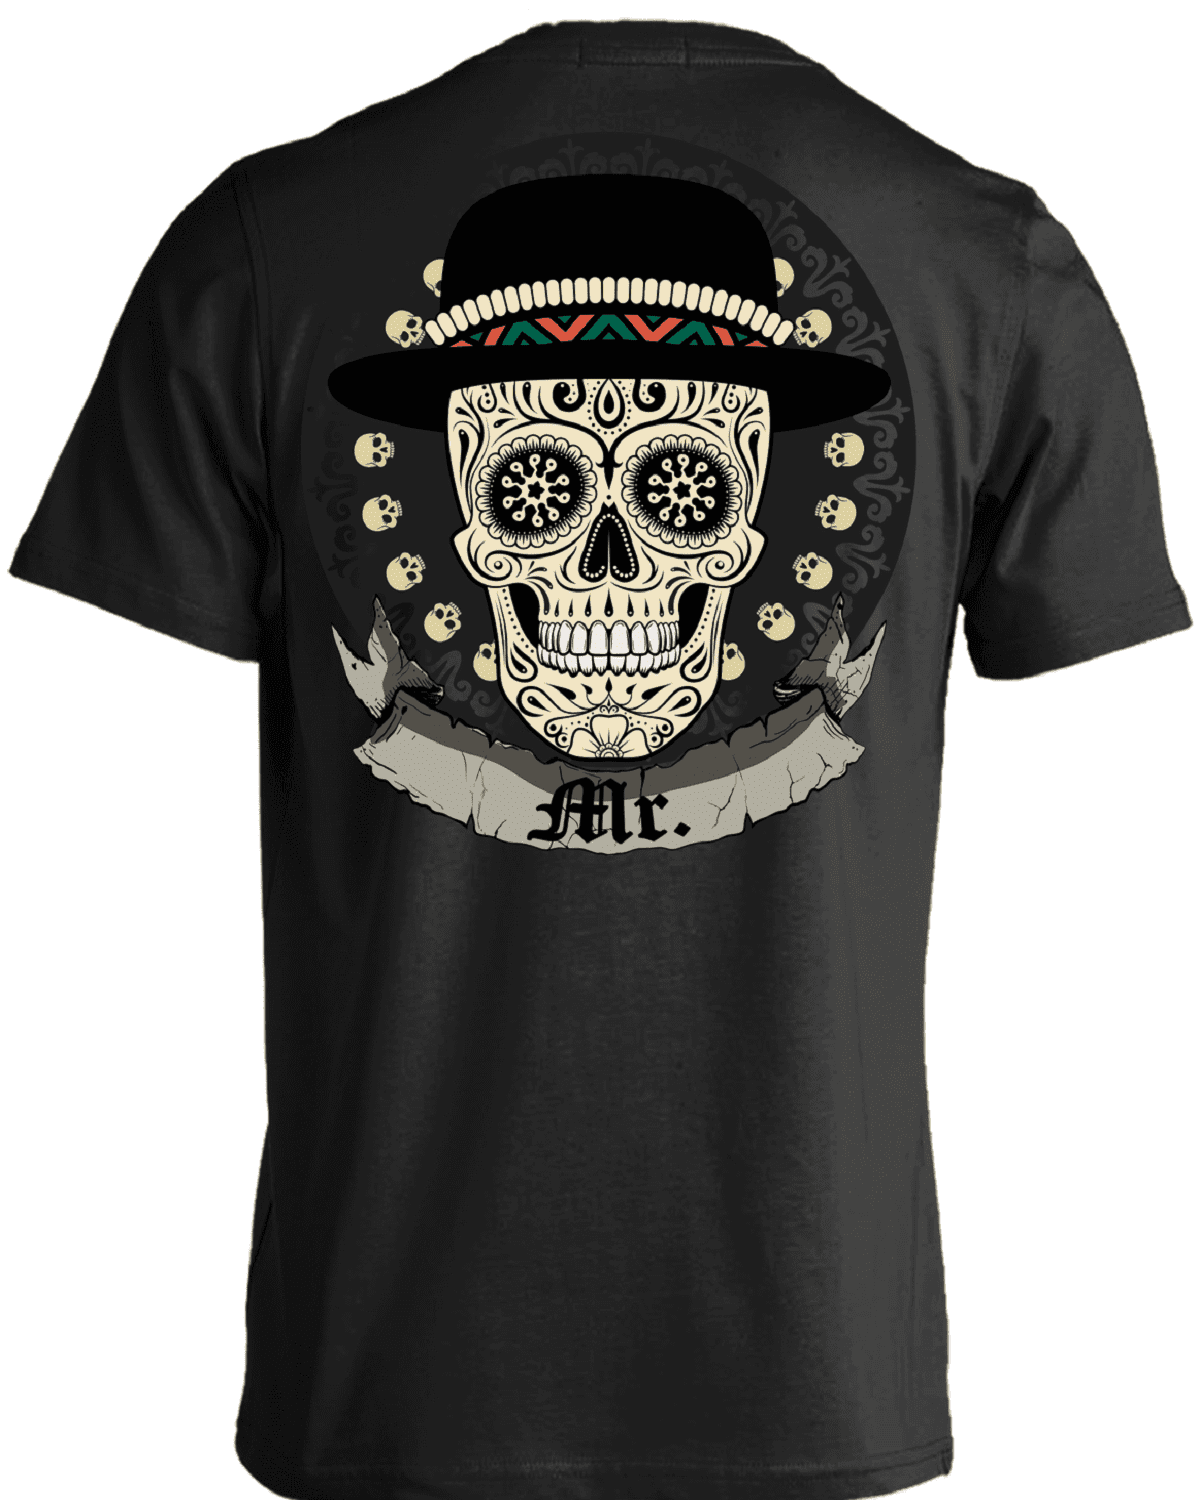 Mexican Skull T-Shirt - American Legend Rider